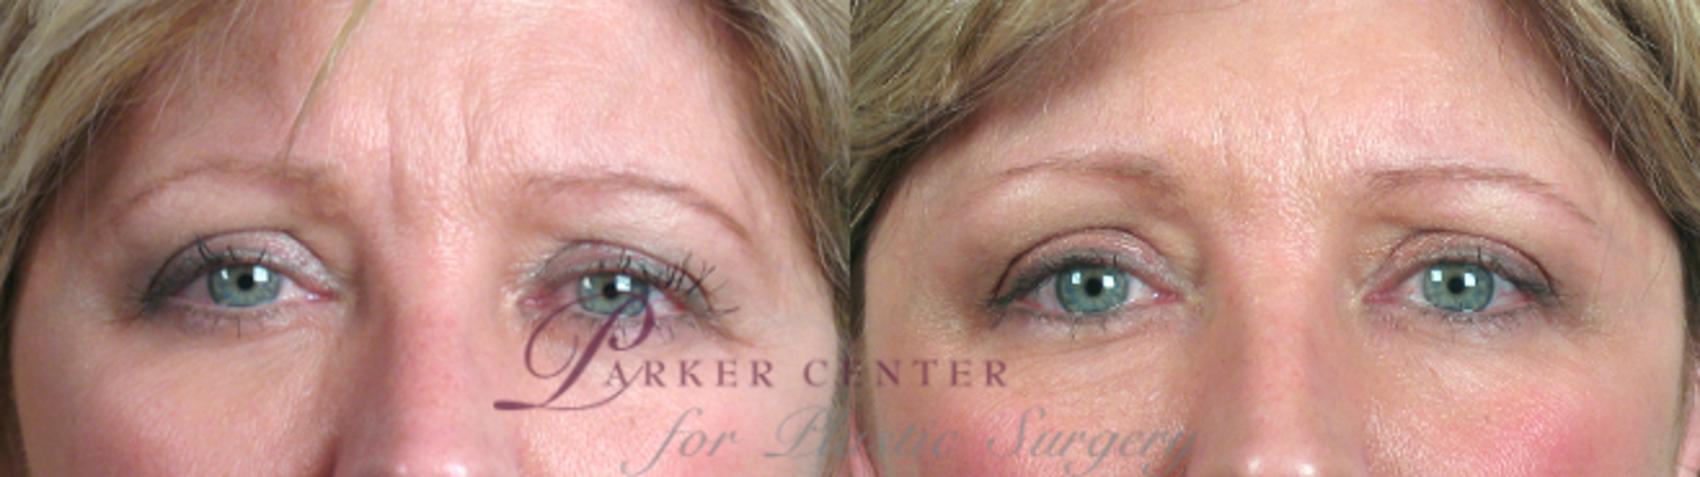 Eyelid Lift Case 63 Before & After View #2 | Paramus, NJ | Parker Center for Plastic Surgery